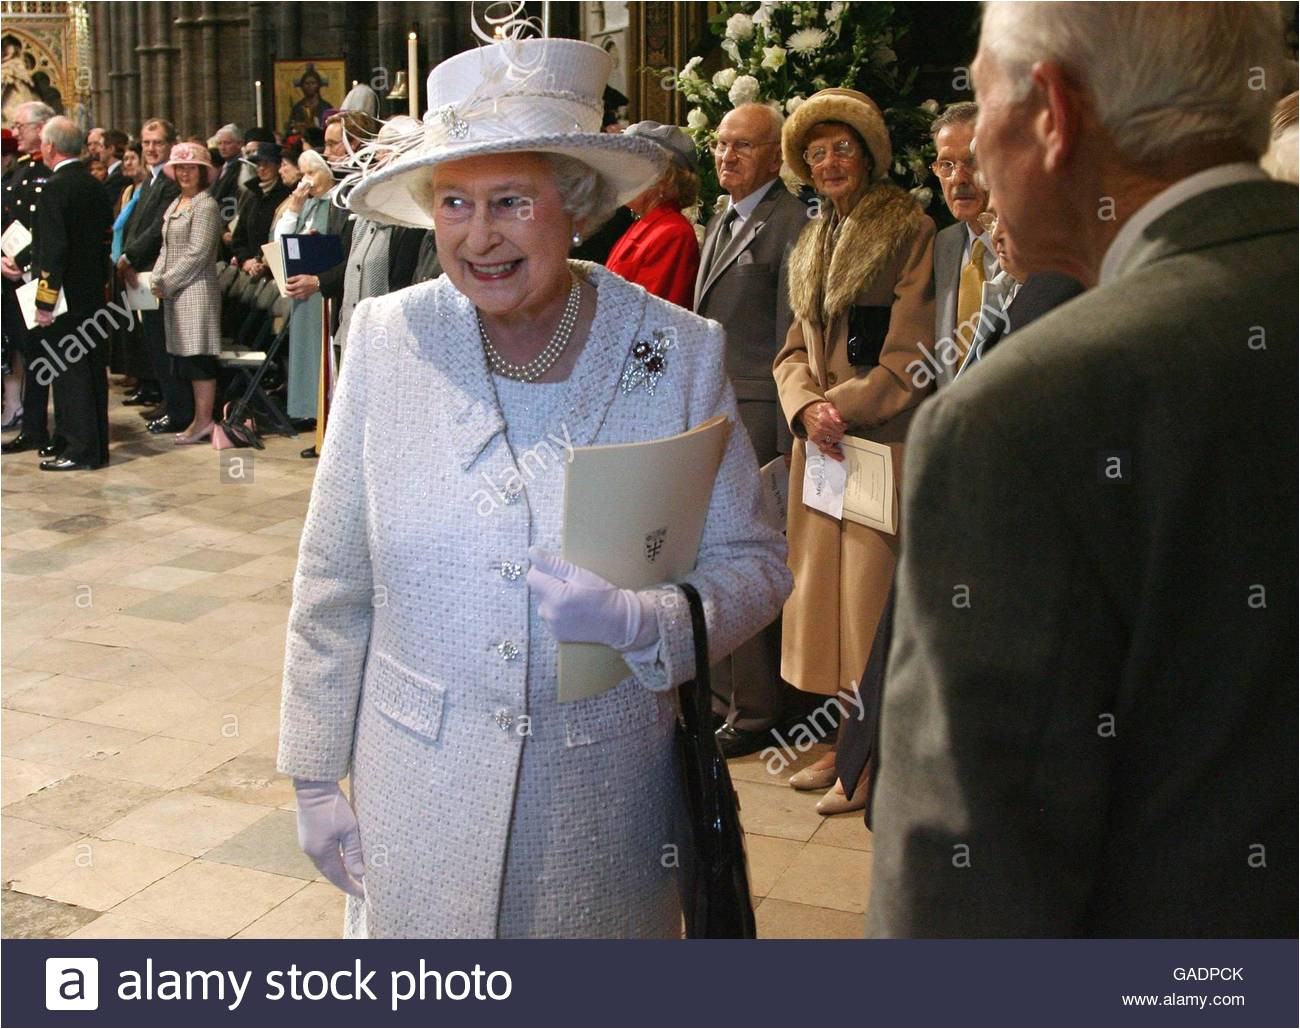 royal wedding diamond anniversary gadpck jpg